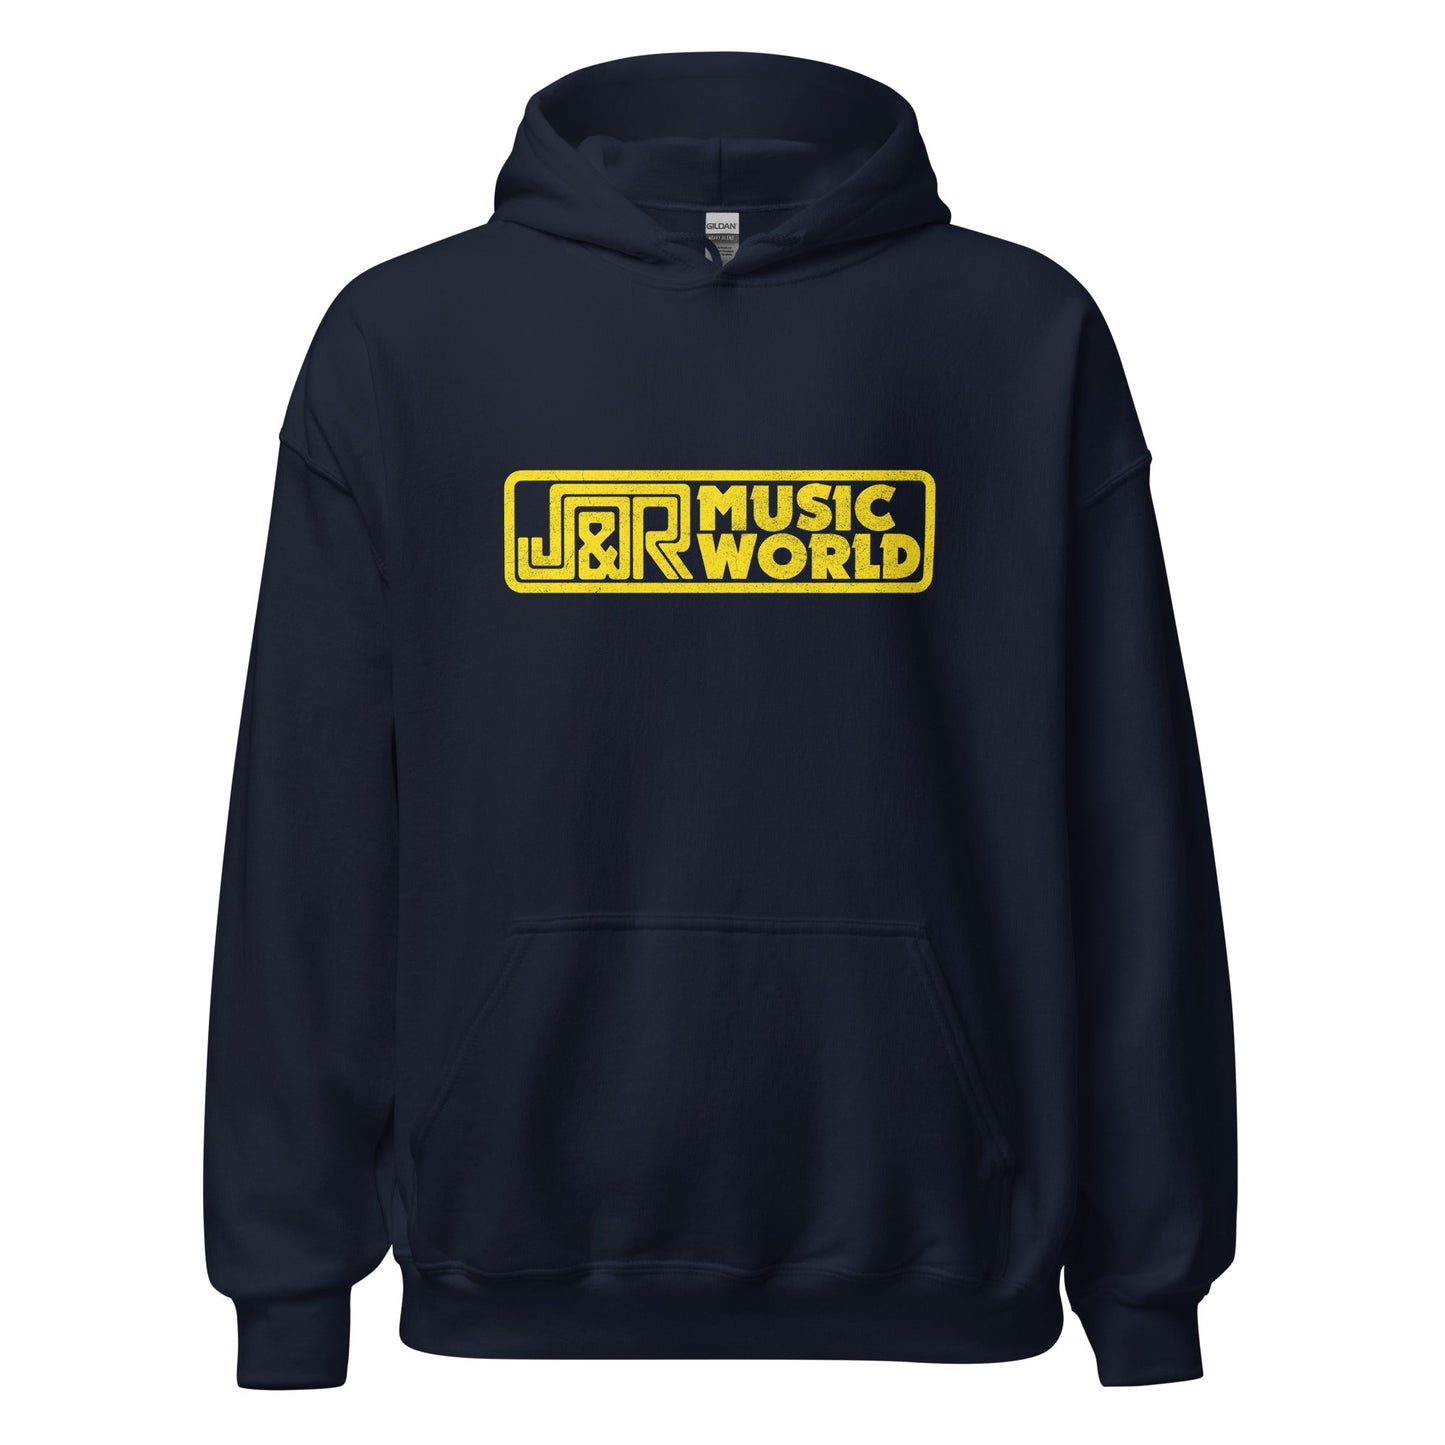 J&R Music World Hoodie | Old School NYC Record Store Throwback Sweatshirt